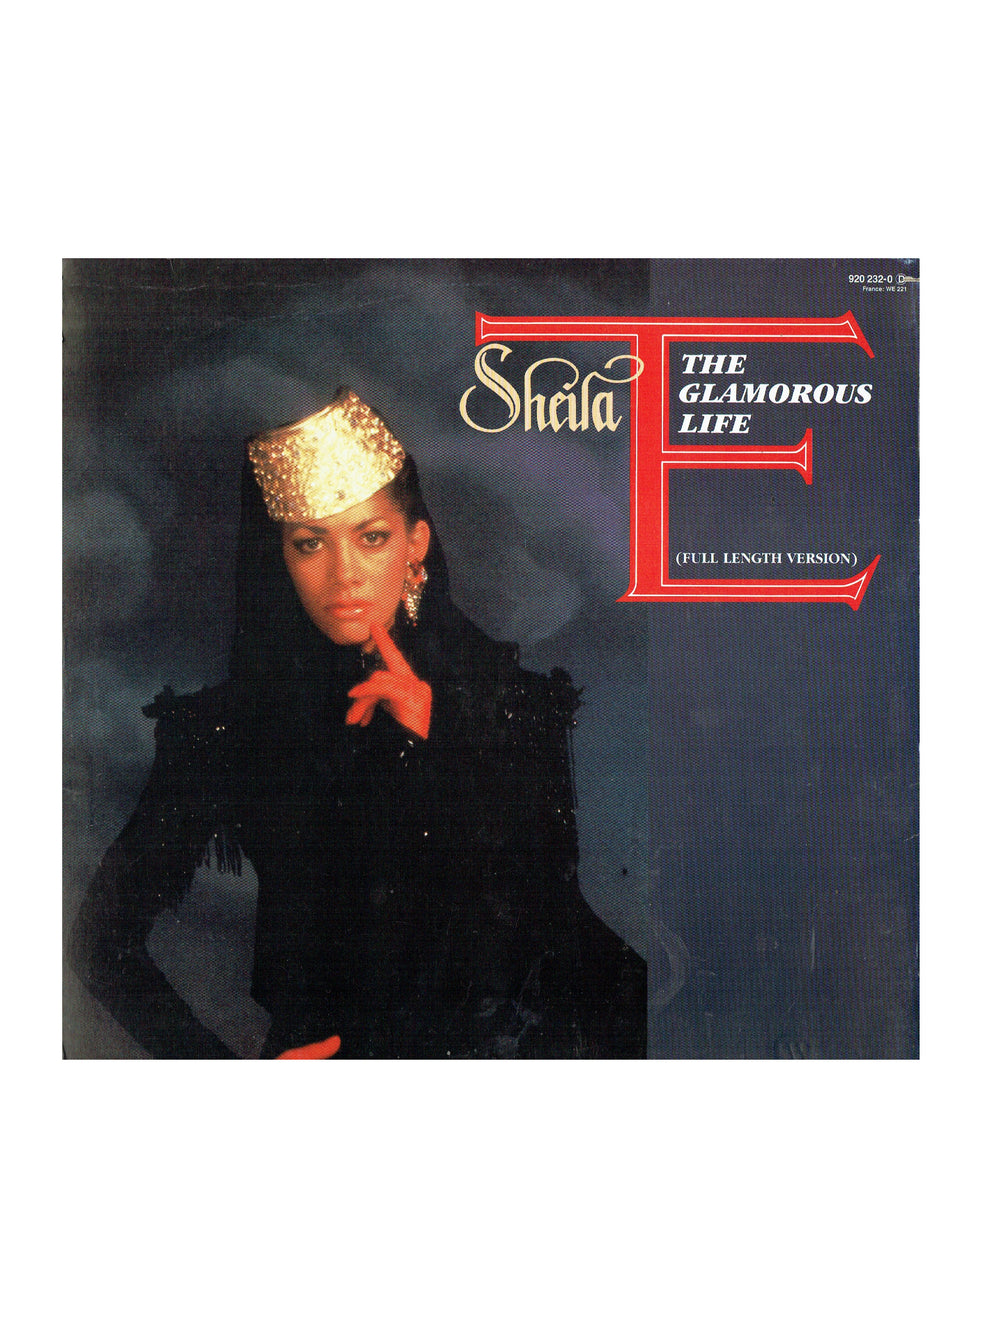 Prince – Sheila E The Glamorous Life 12 Vinyl Single EU German With Poster Prince AS